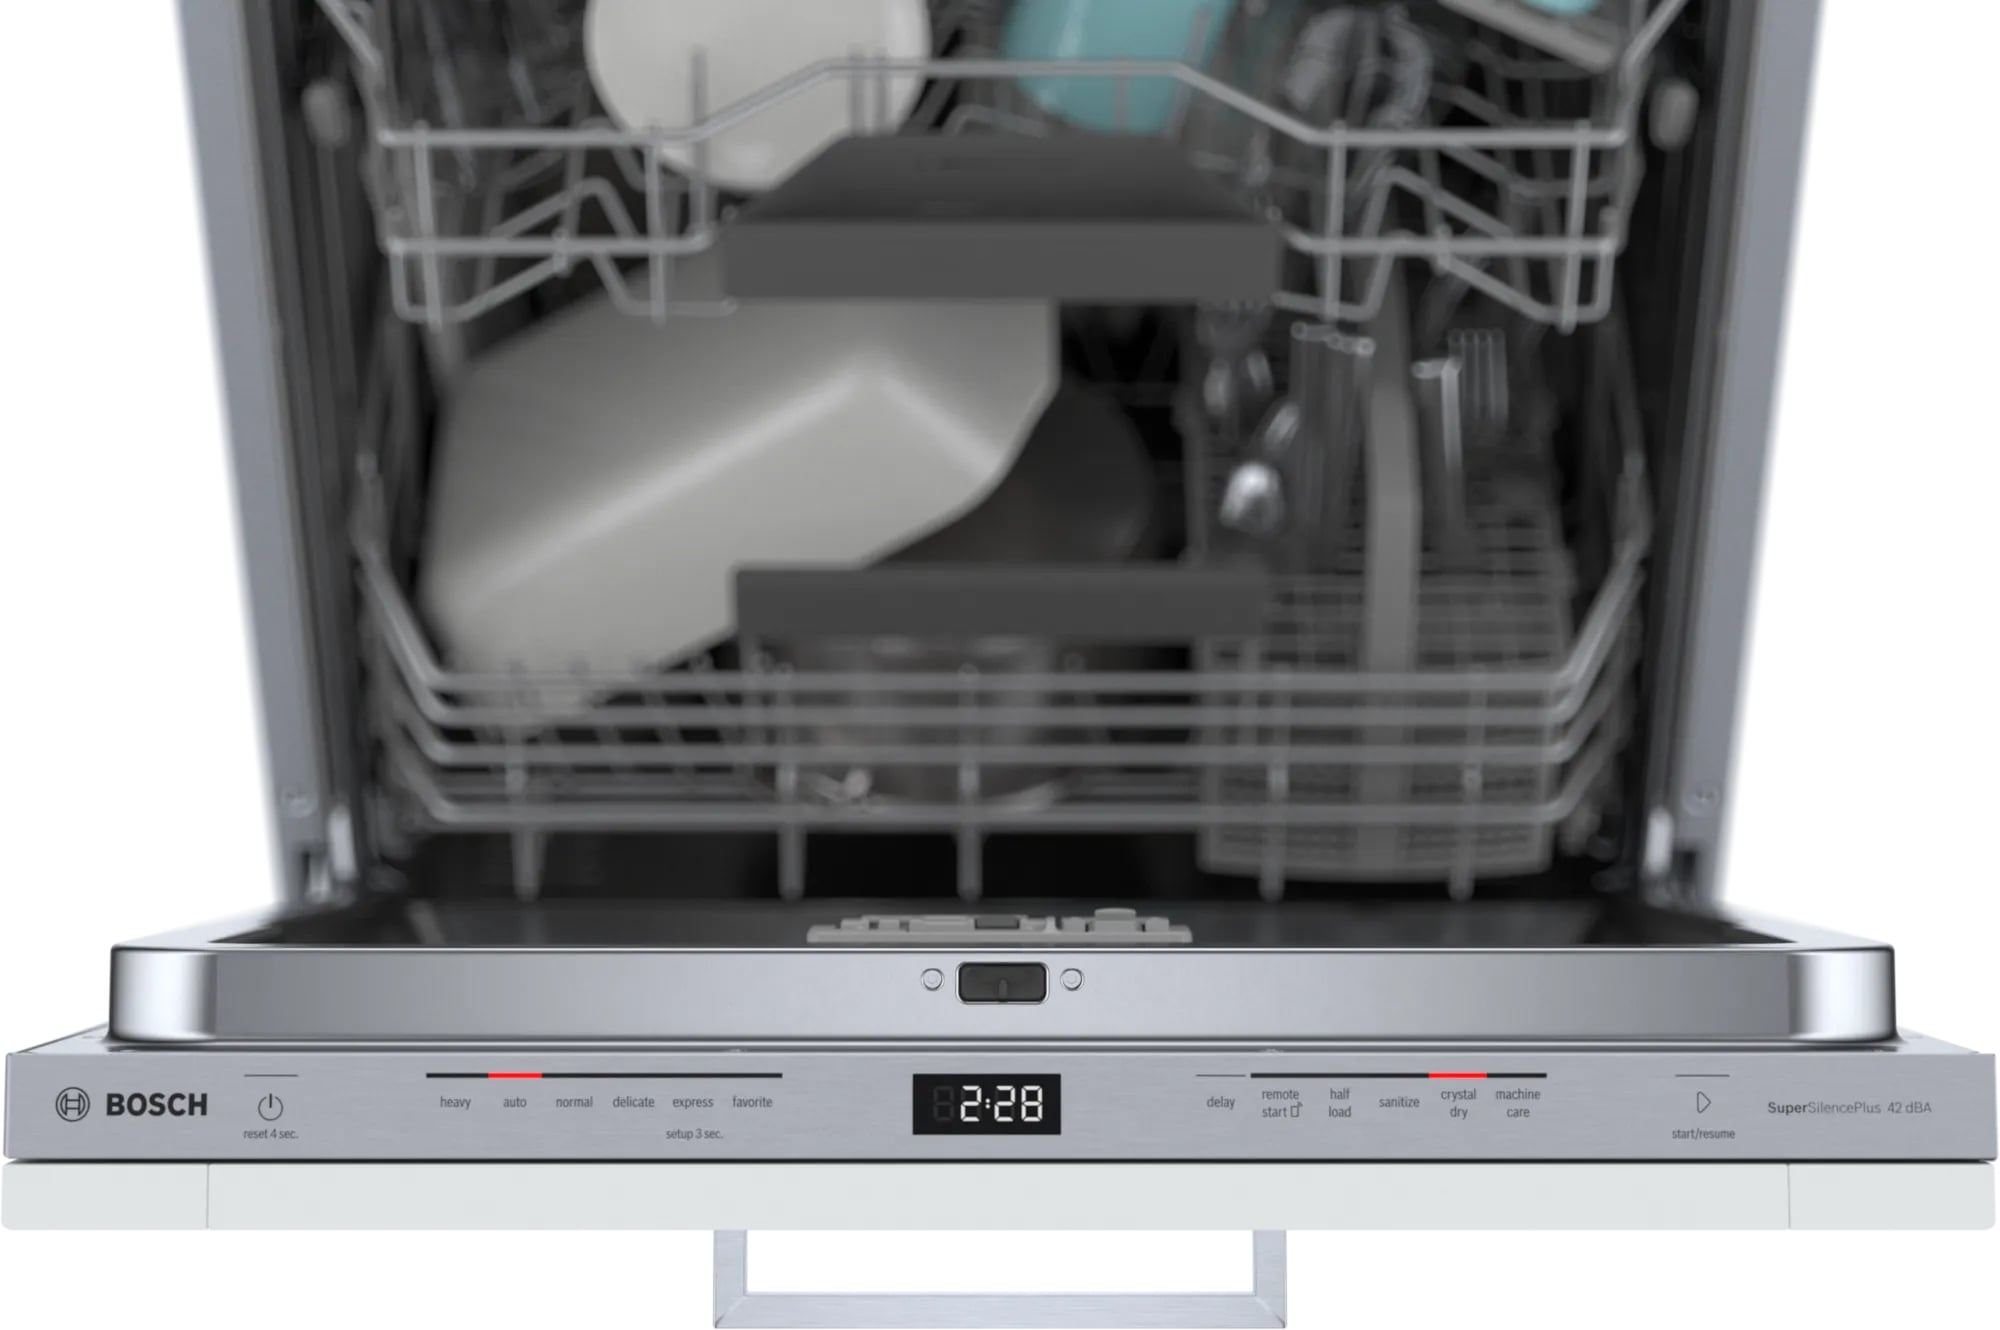 Bosch - 42 dBA Built In Dishwasher in Panel Ready - SHV78B73UC